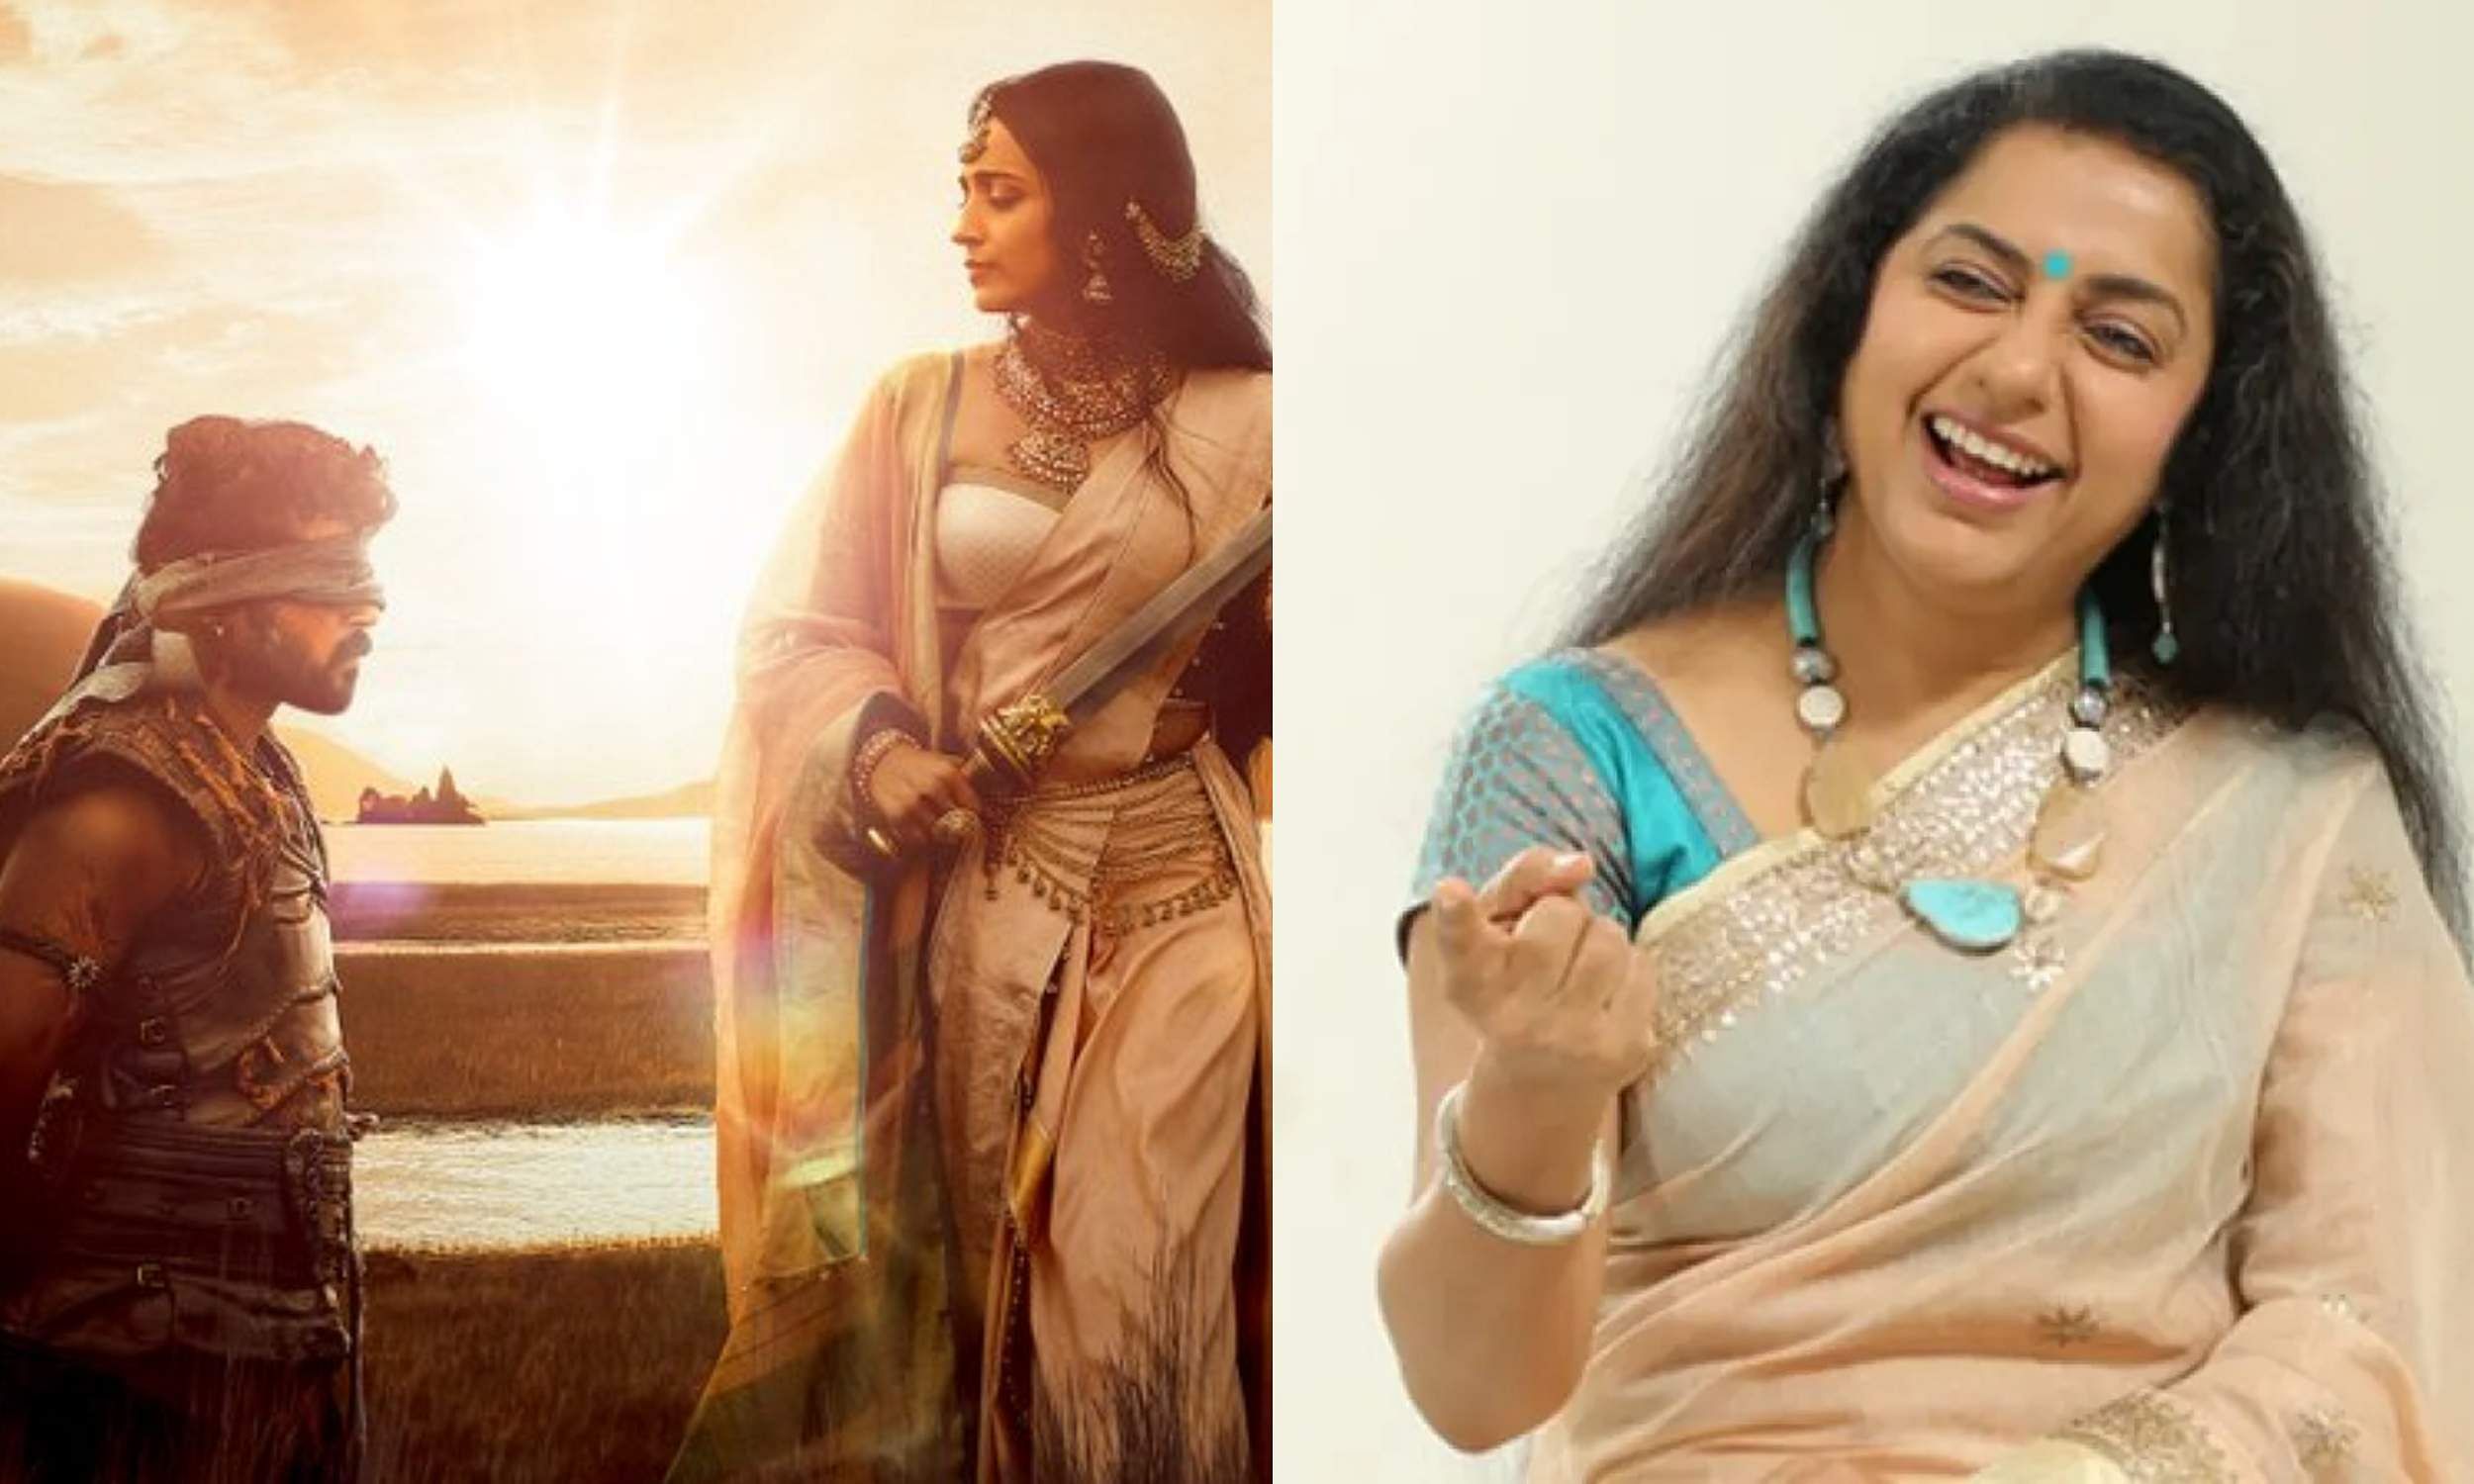 Suhasini: Vanthiyathevan and Kundhavai meeting in PS II is my favourite romantic scene